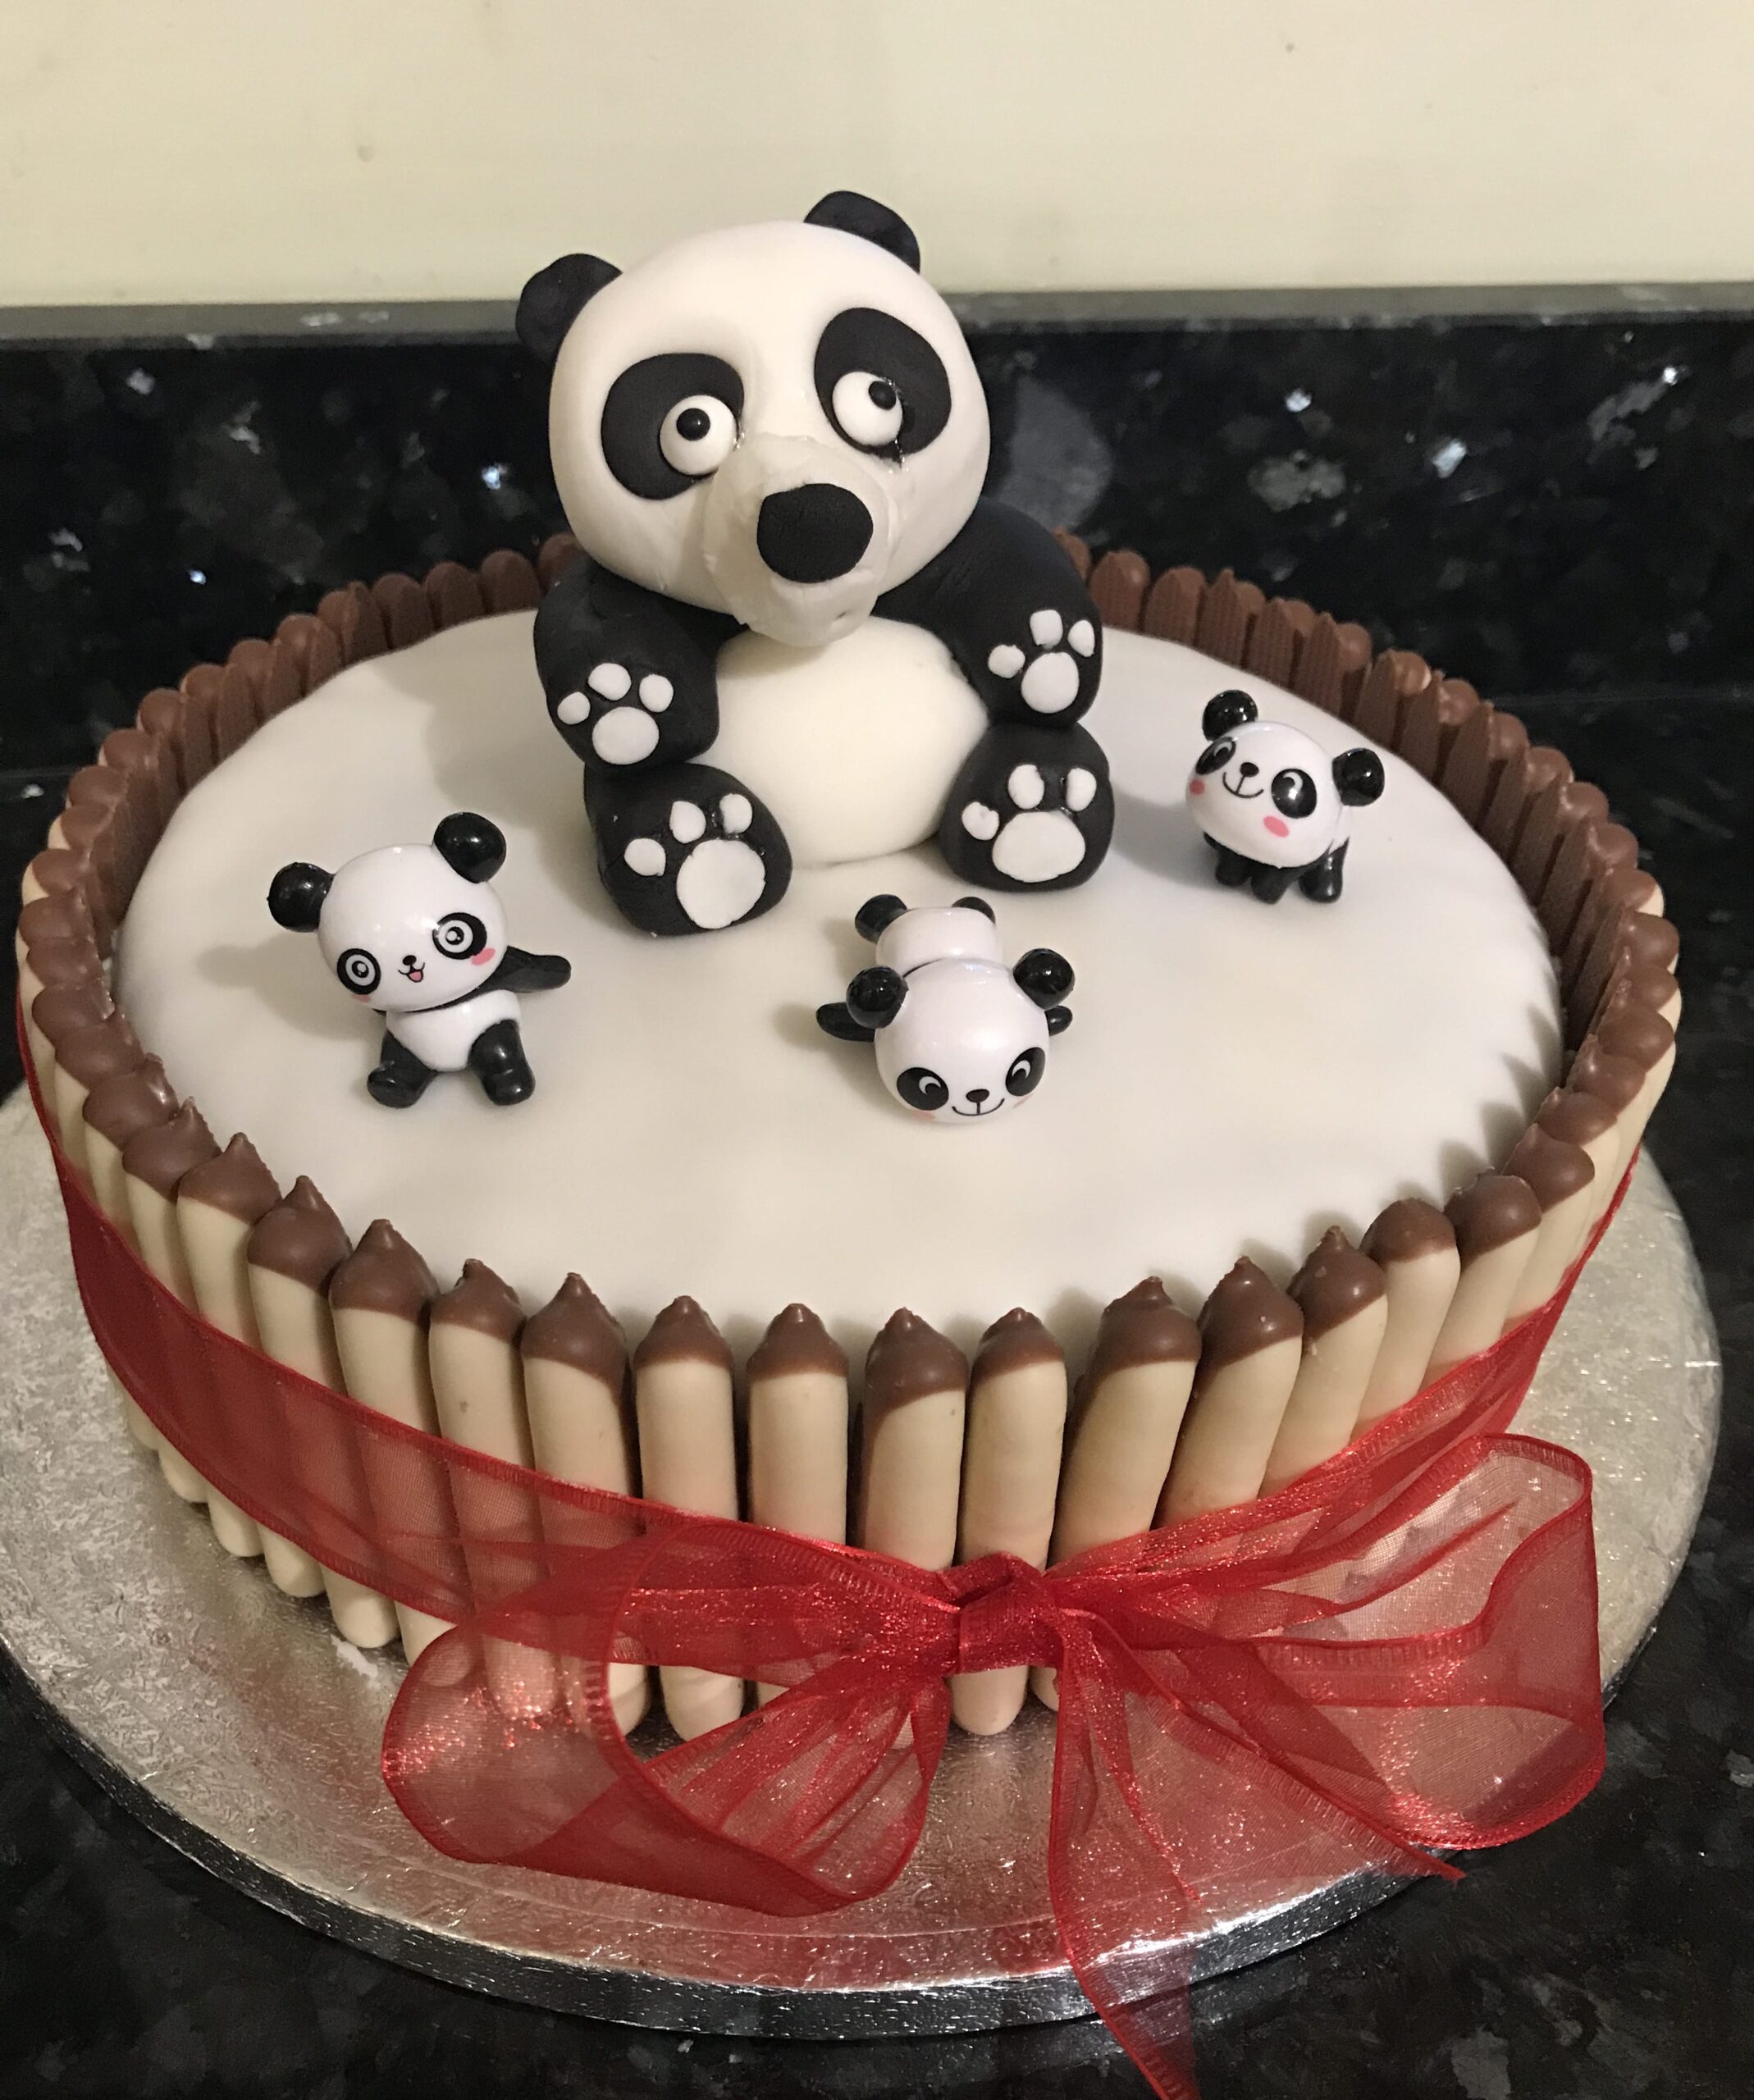 Giant panda marks birthday with cake, party at National Zoo - The  Washington Post